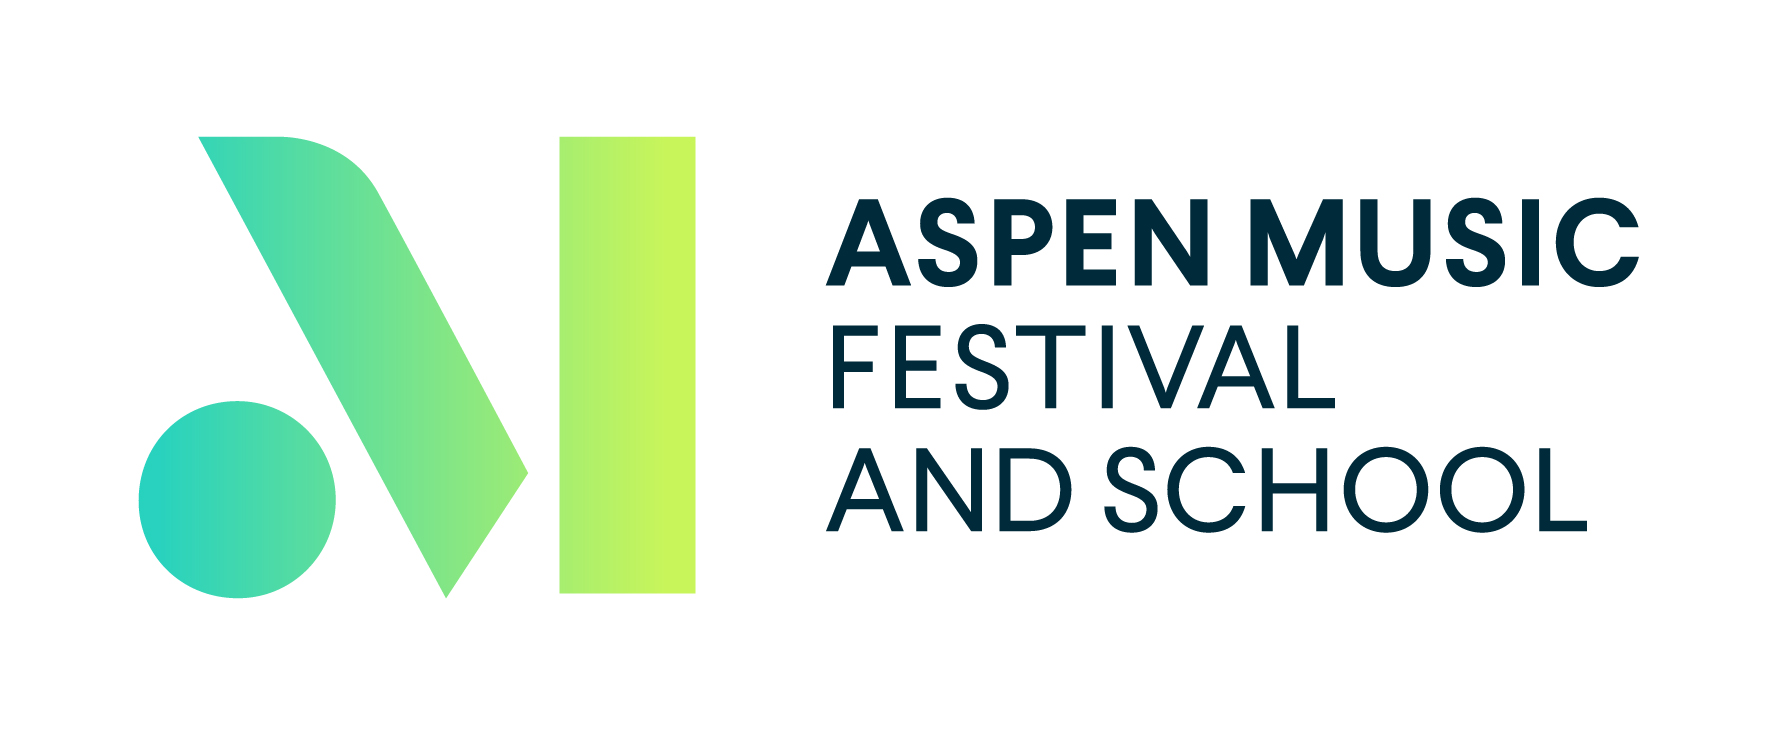 Design 2016 | Aspen Music Festival And School